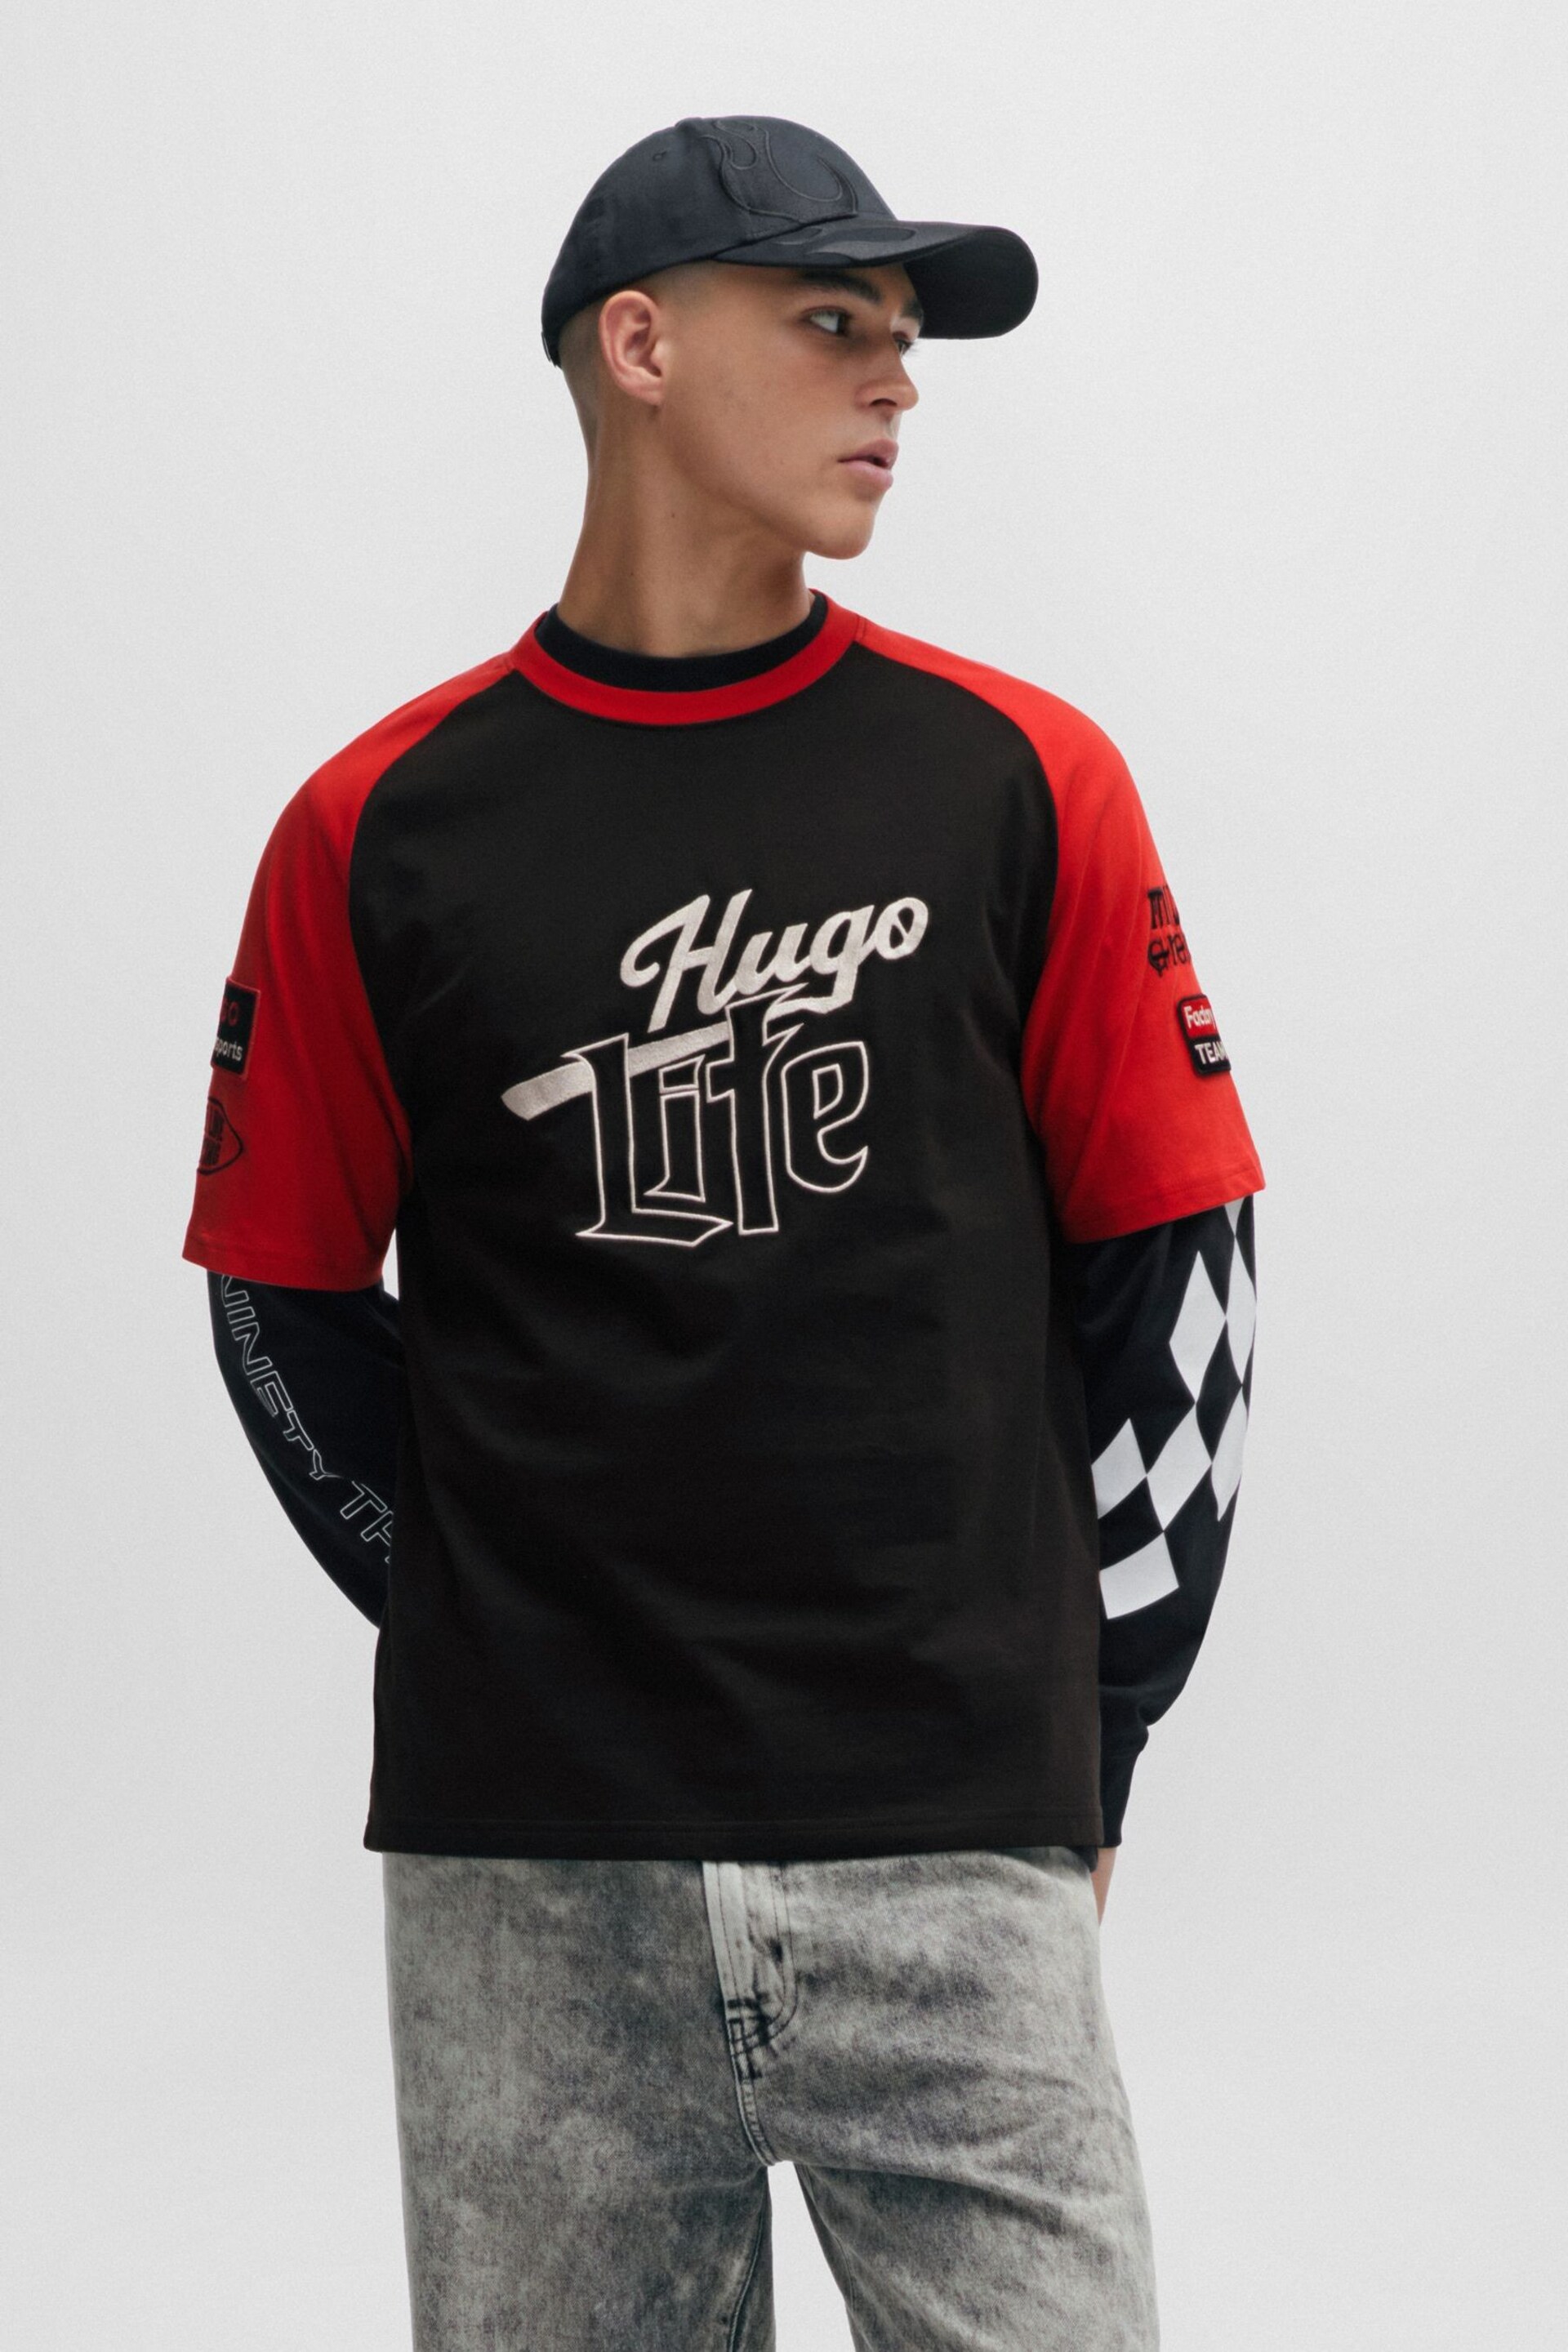 HUGO Racing Logo Artwork Relaxed Fit Black T-Shirt - Image 3 of 7